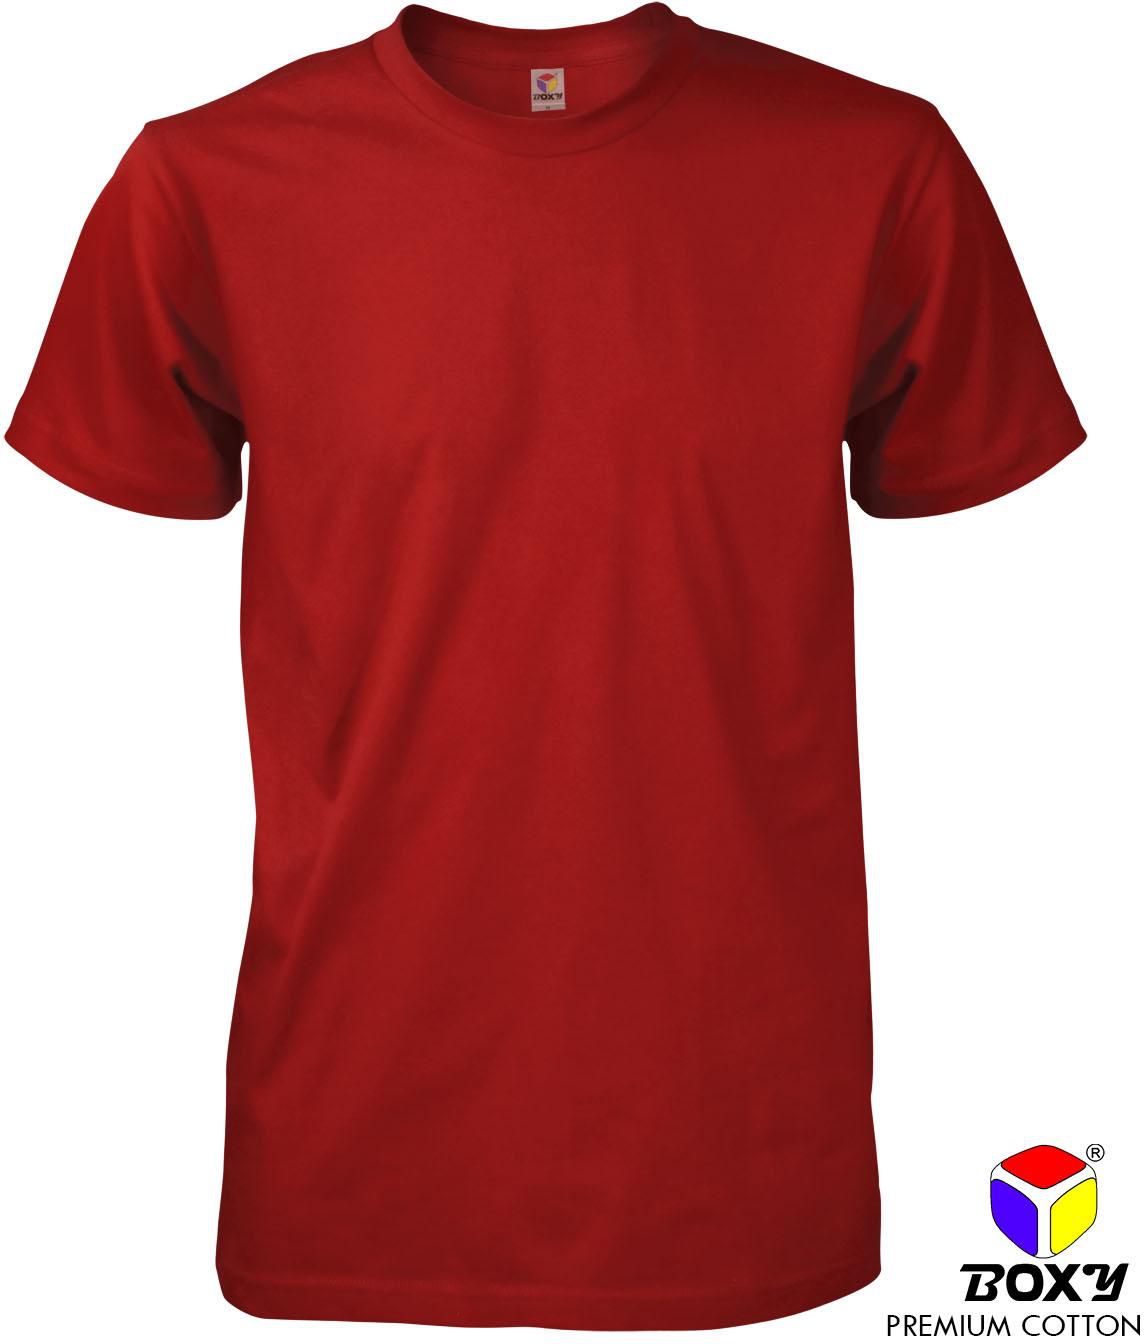 Boxy Premium Cotton Round Neck T-shirt - 7 Sizes (Red)